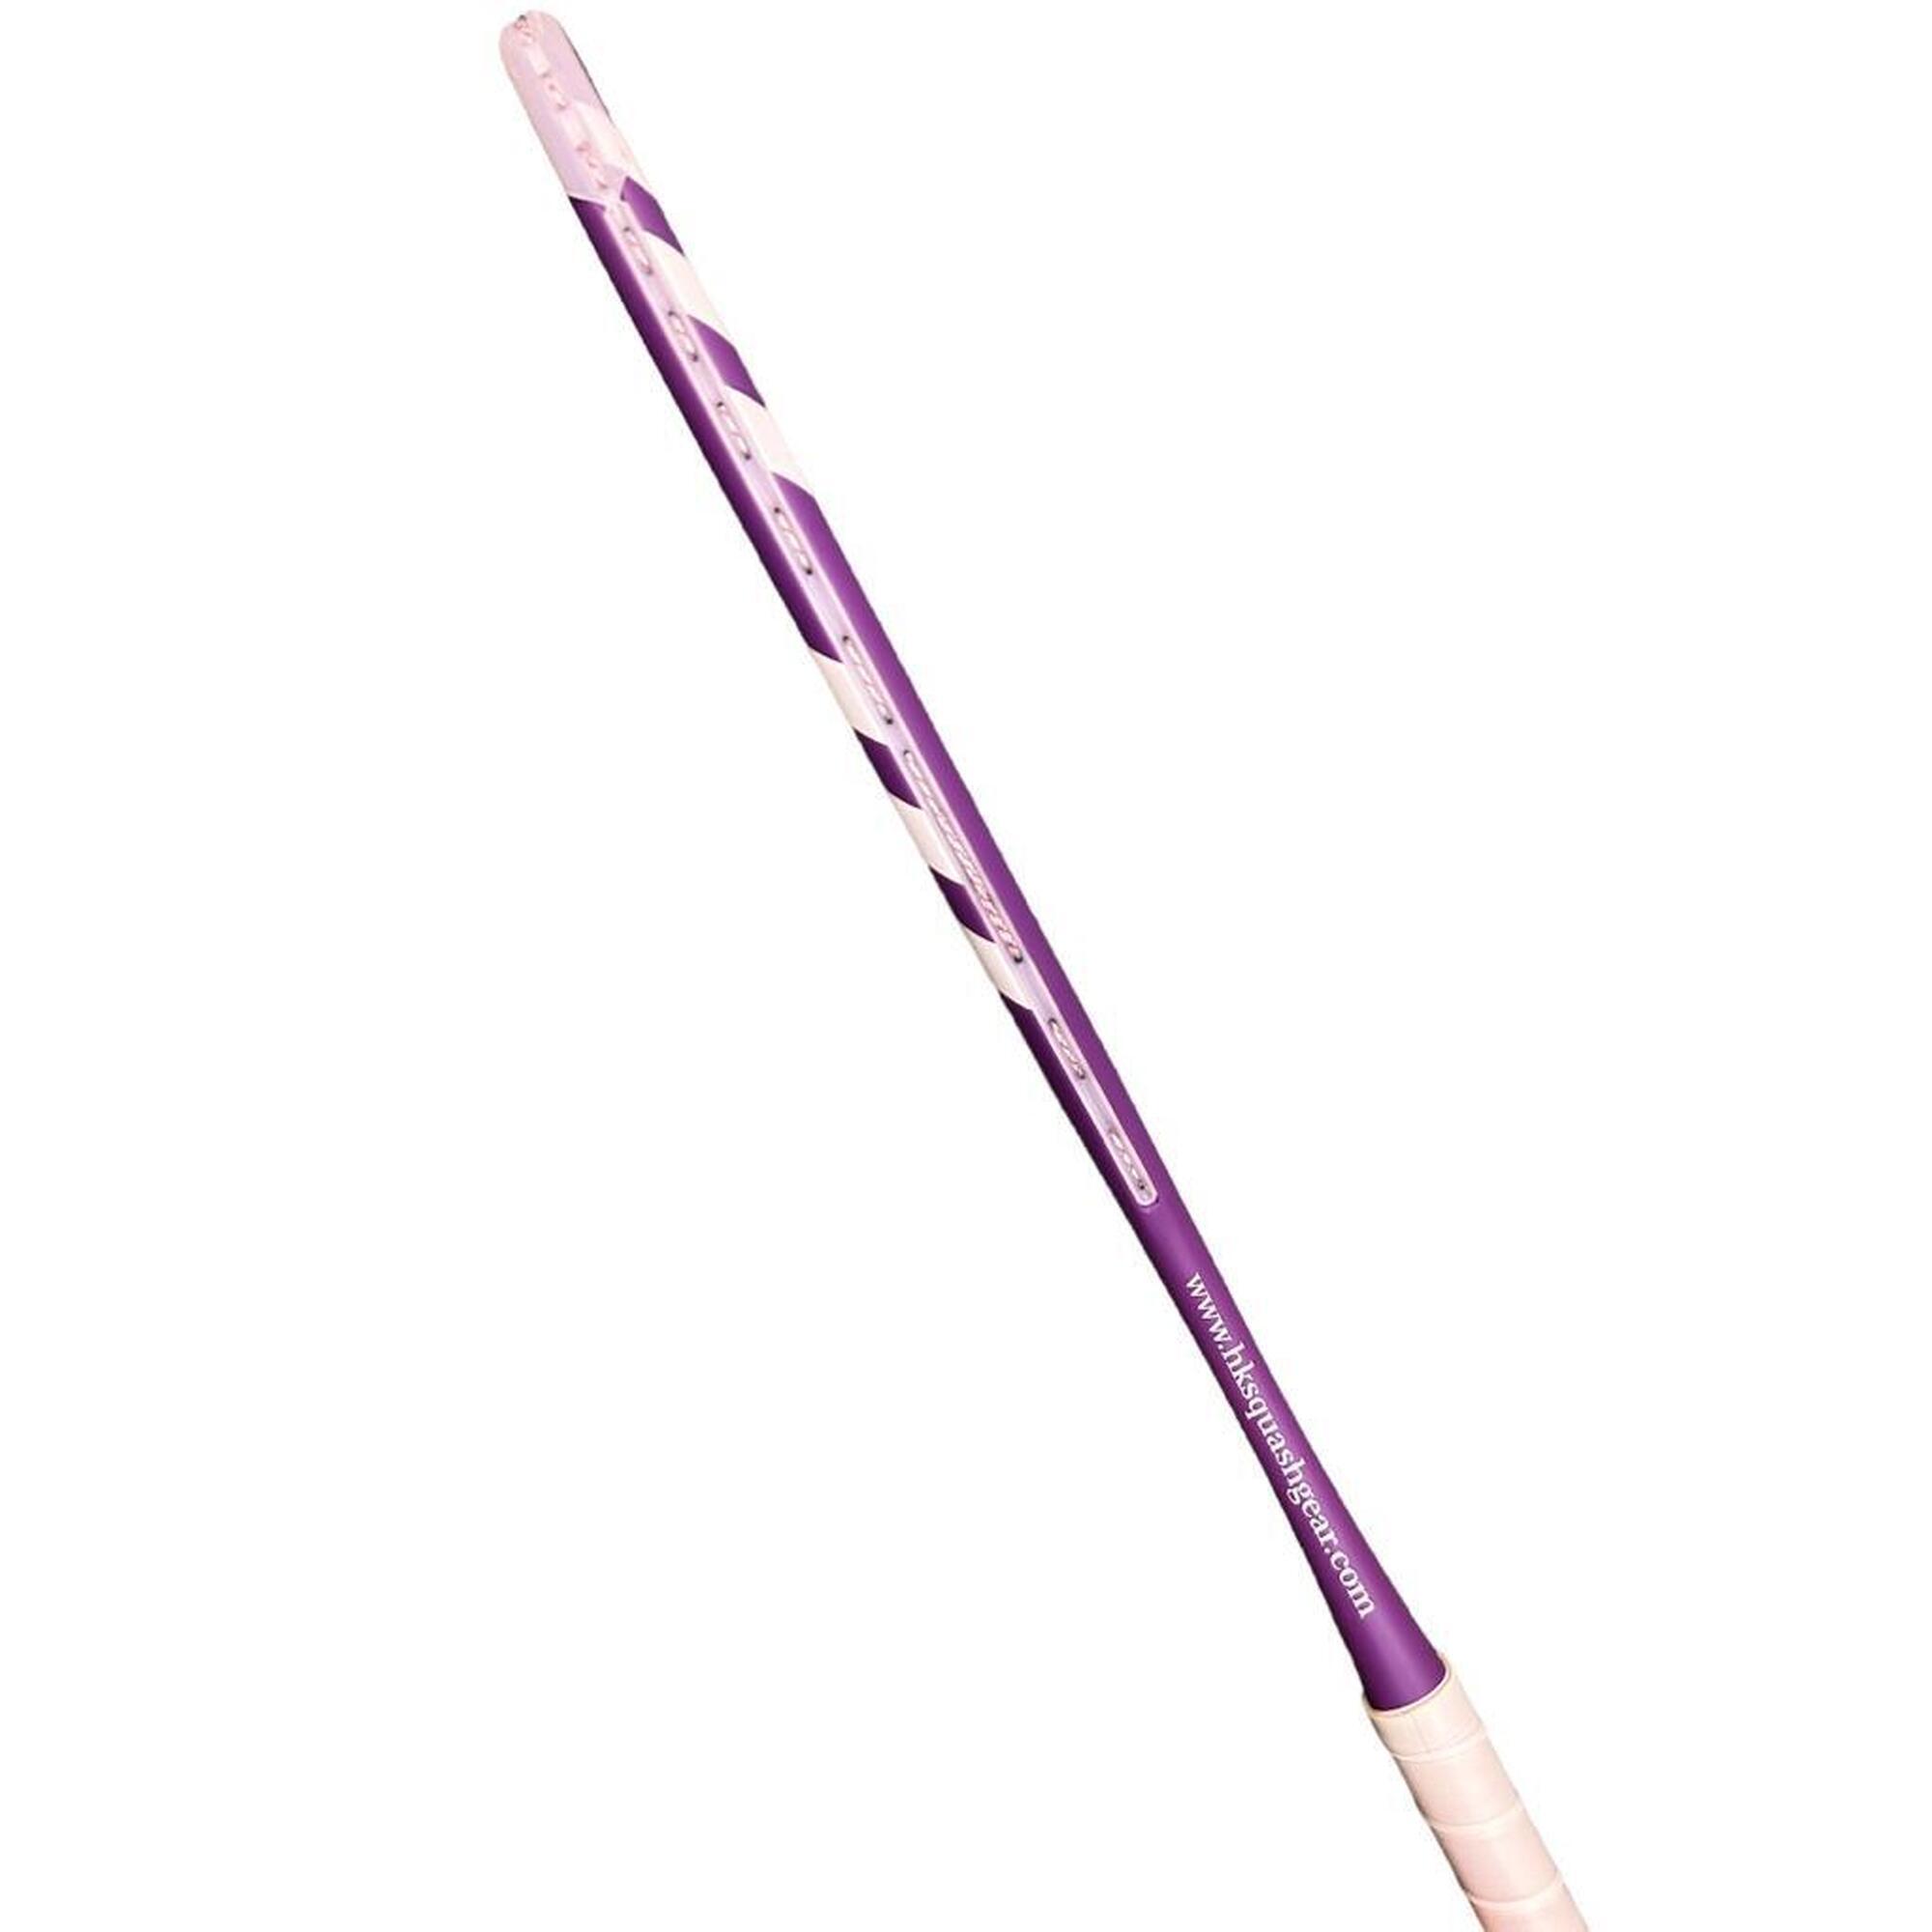 Macaroon Series 2.0 120 中性碳纖維壁球拍 - 深紫色